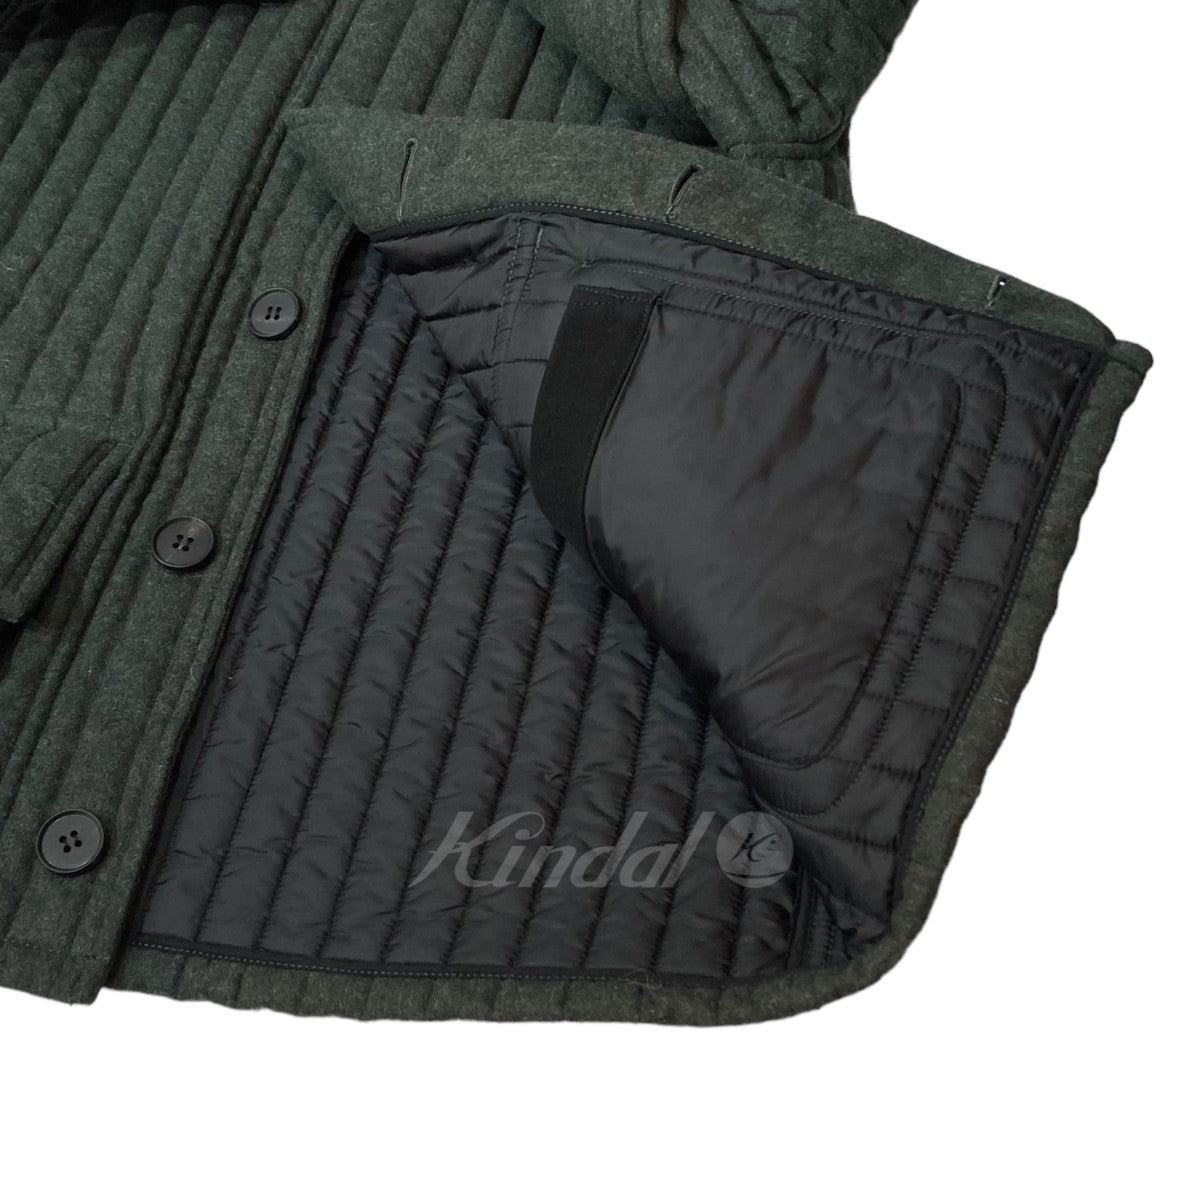 MATSUFUJI(マツフジ) Stripe Quilted Jacket キルティングジャケット M203-0101